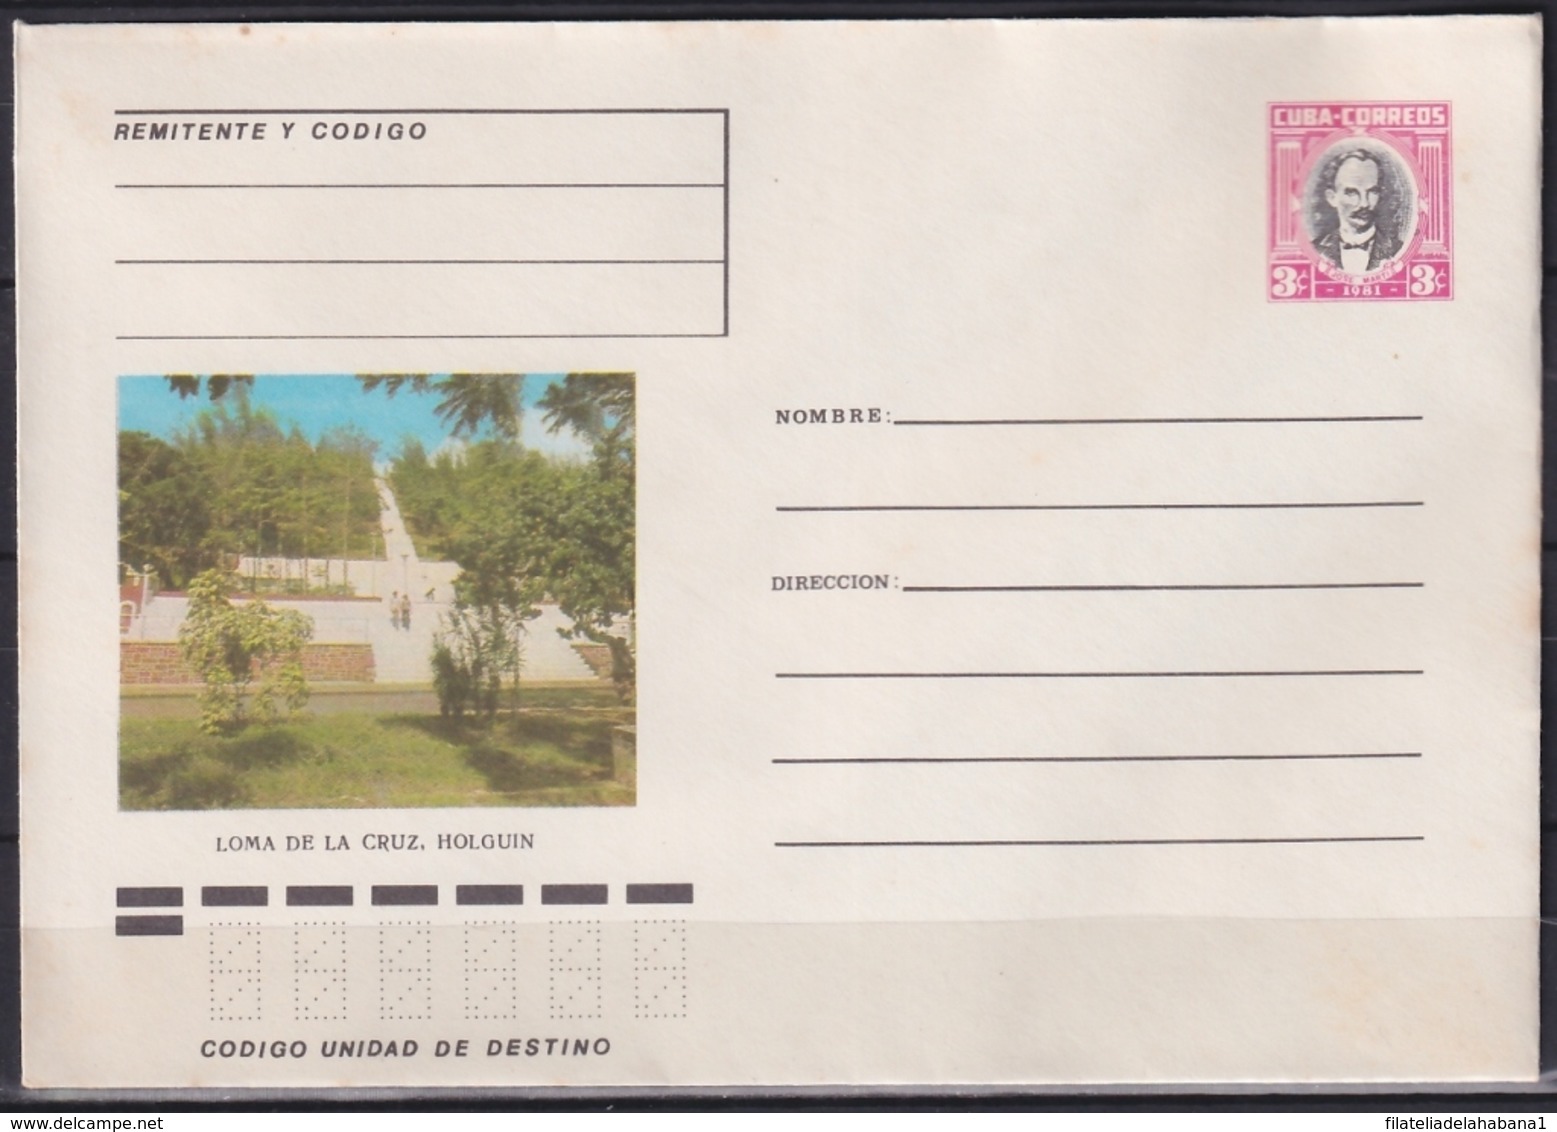 1981-EP-144 CUBA 1981 3c POSTAL STATIONERY COVER. HOLGUIN, LOMA DE LA CRUZ. - Lettres & Documents